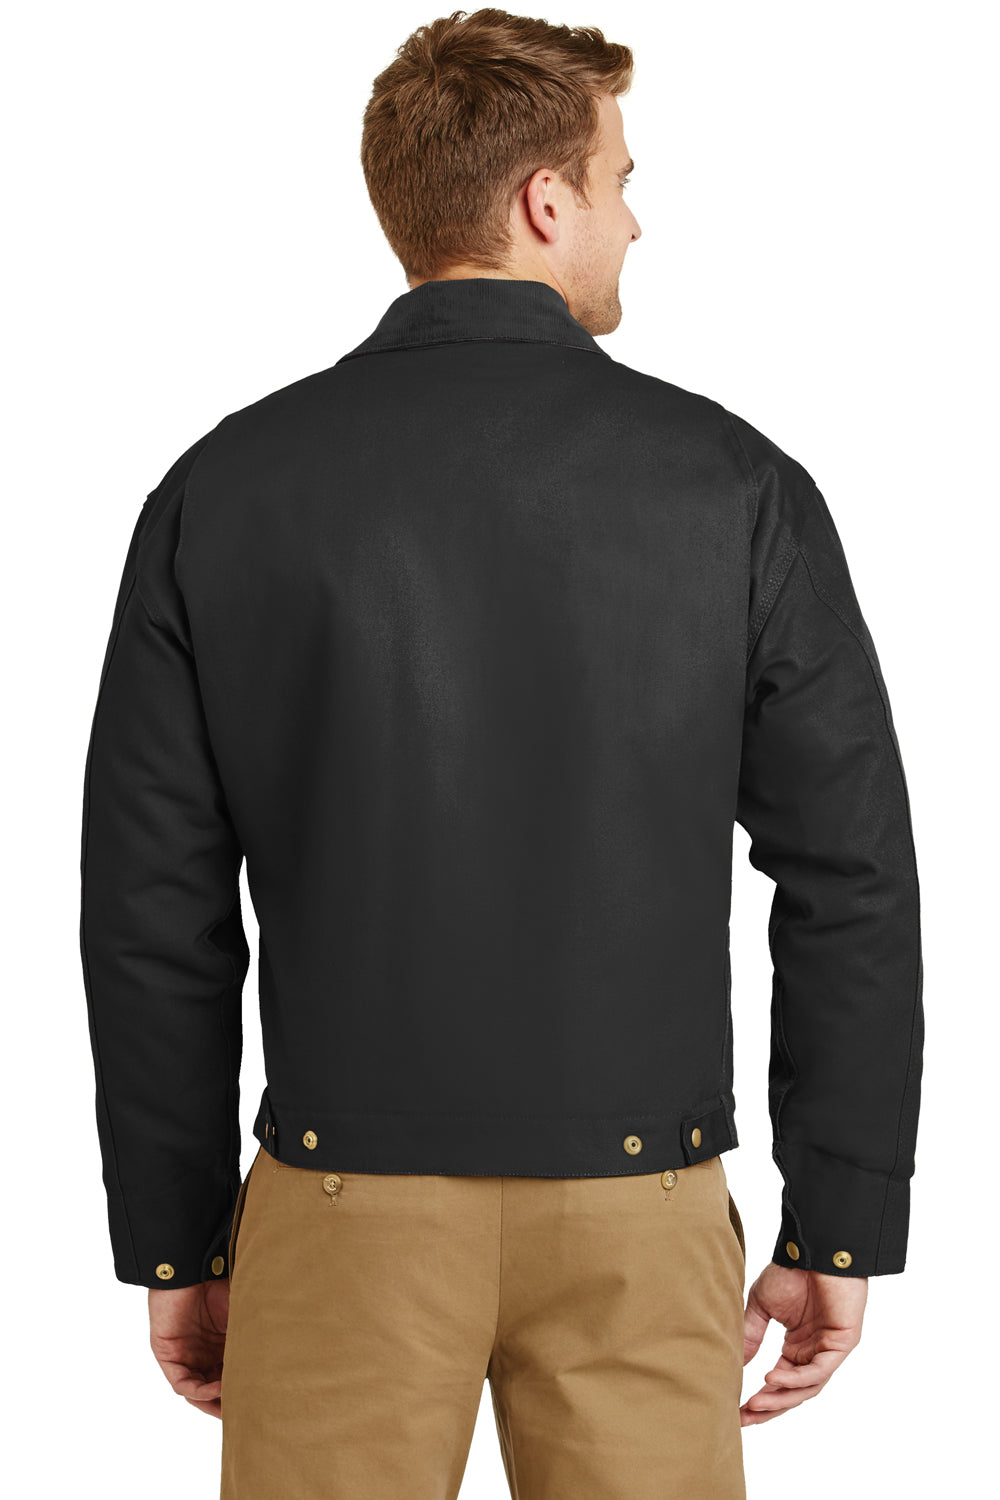 CornerStone J763 Mens Duck Cloth Full Zip Jacket Black Back